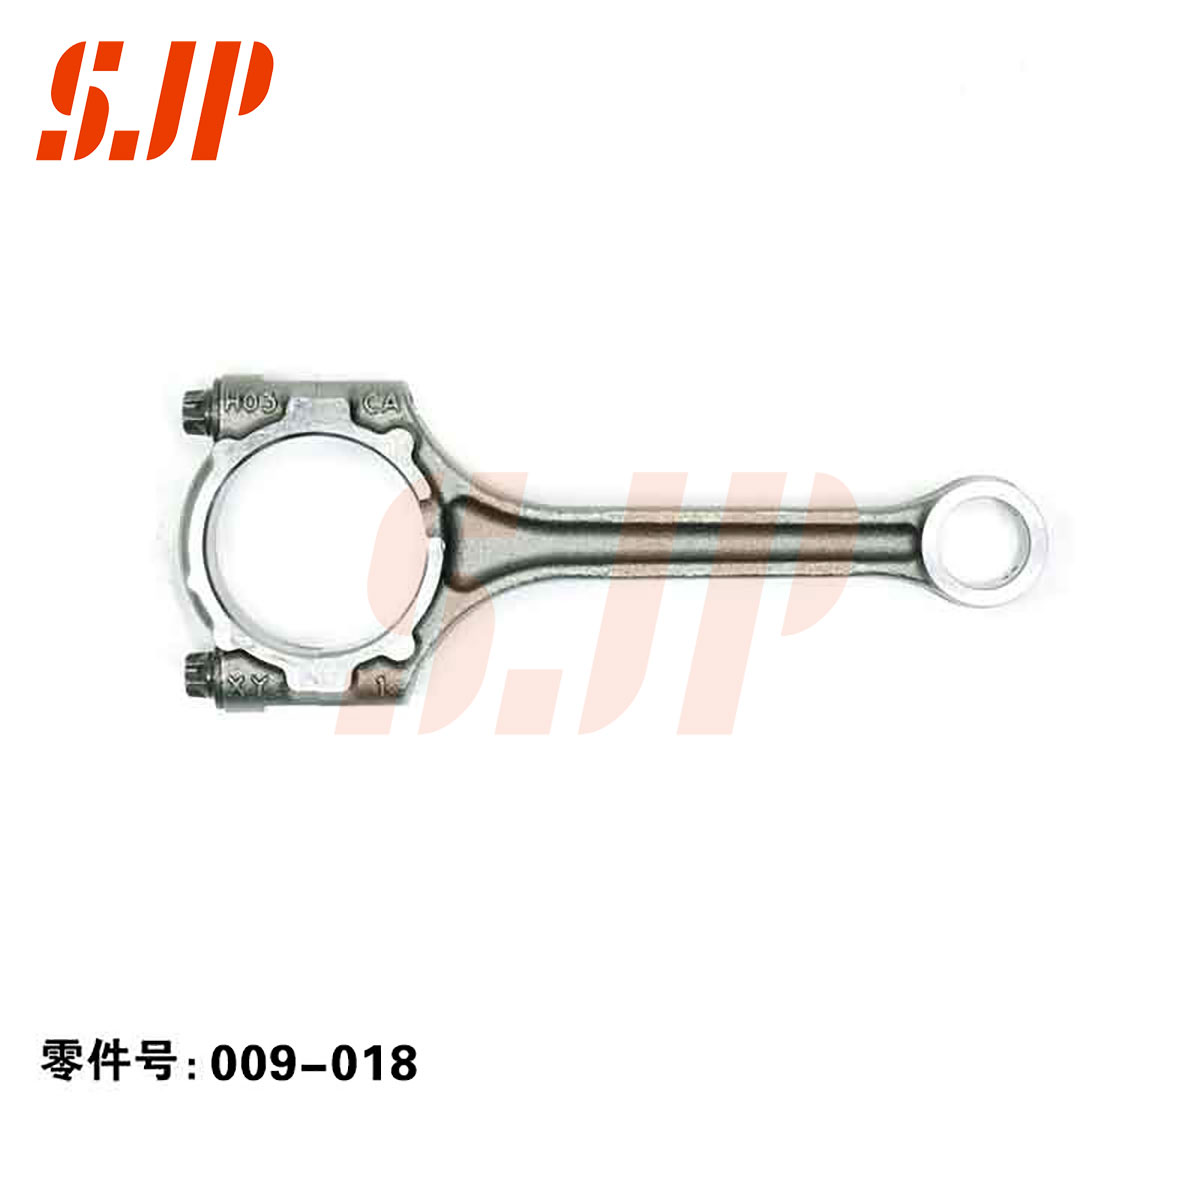 SJ-009-018 Connecting Rod For Changan Auto 473-EA15/QG/QF/H03 VVT